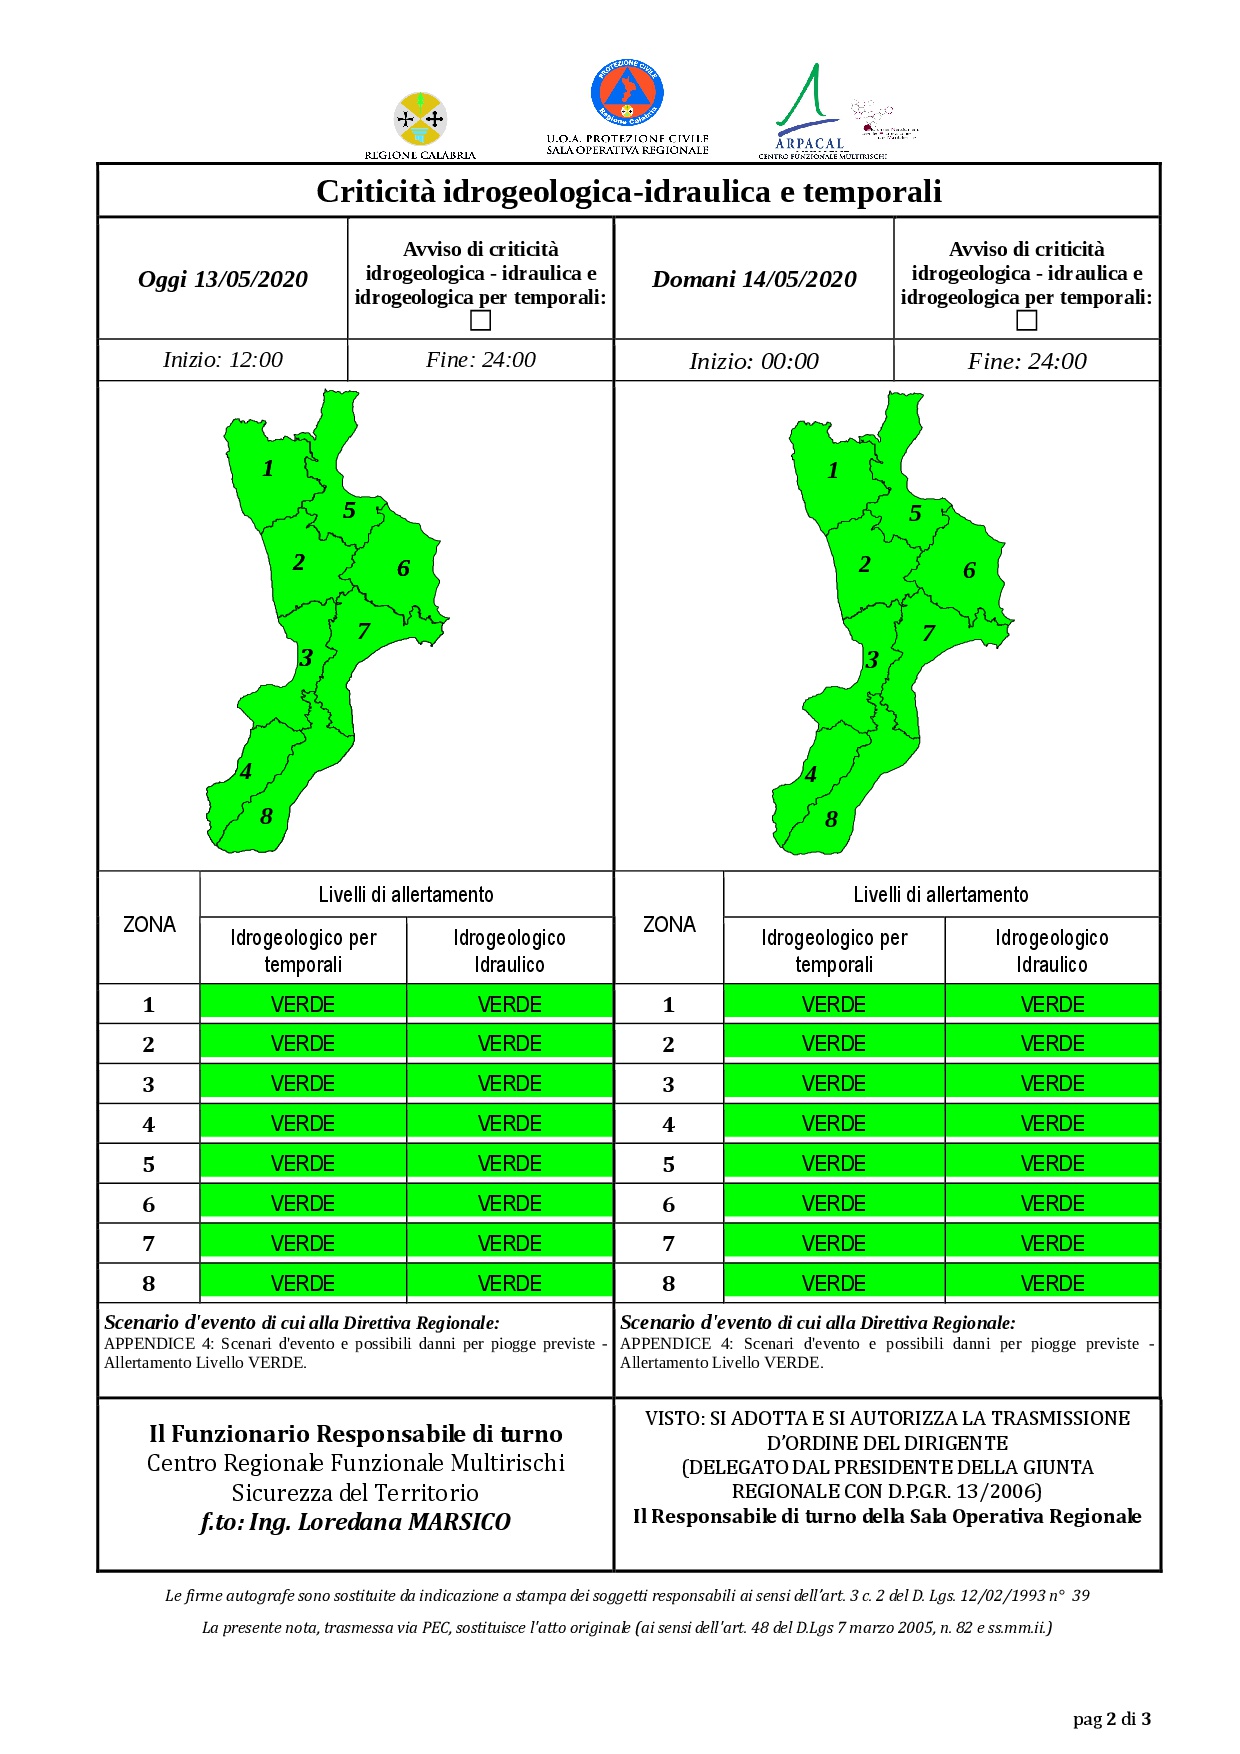 Criticità idrogeologica-idraulica e temporali in Calabria 13-05-2020